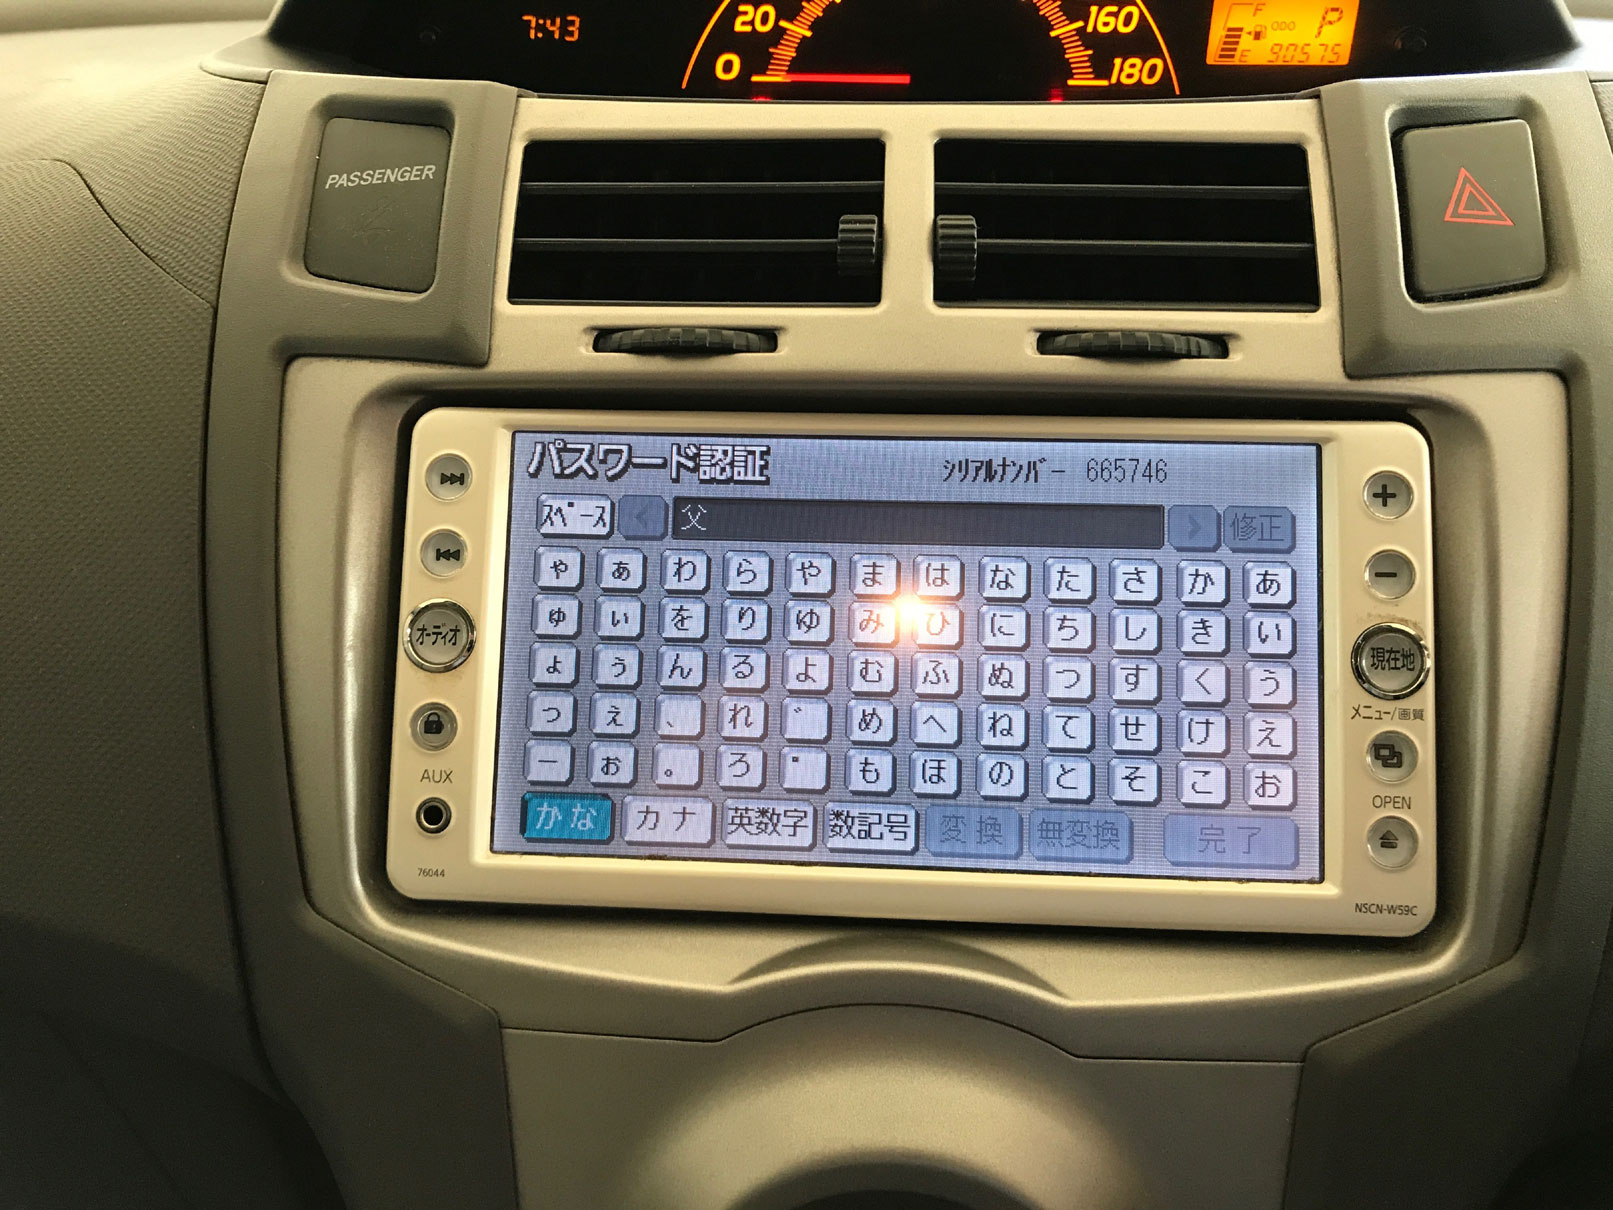 Download nsdn-w59 software Unlock Toyota